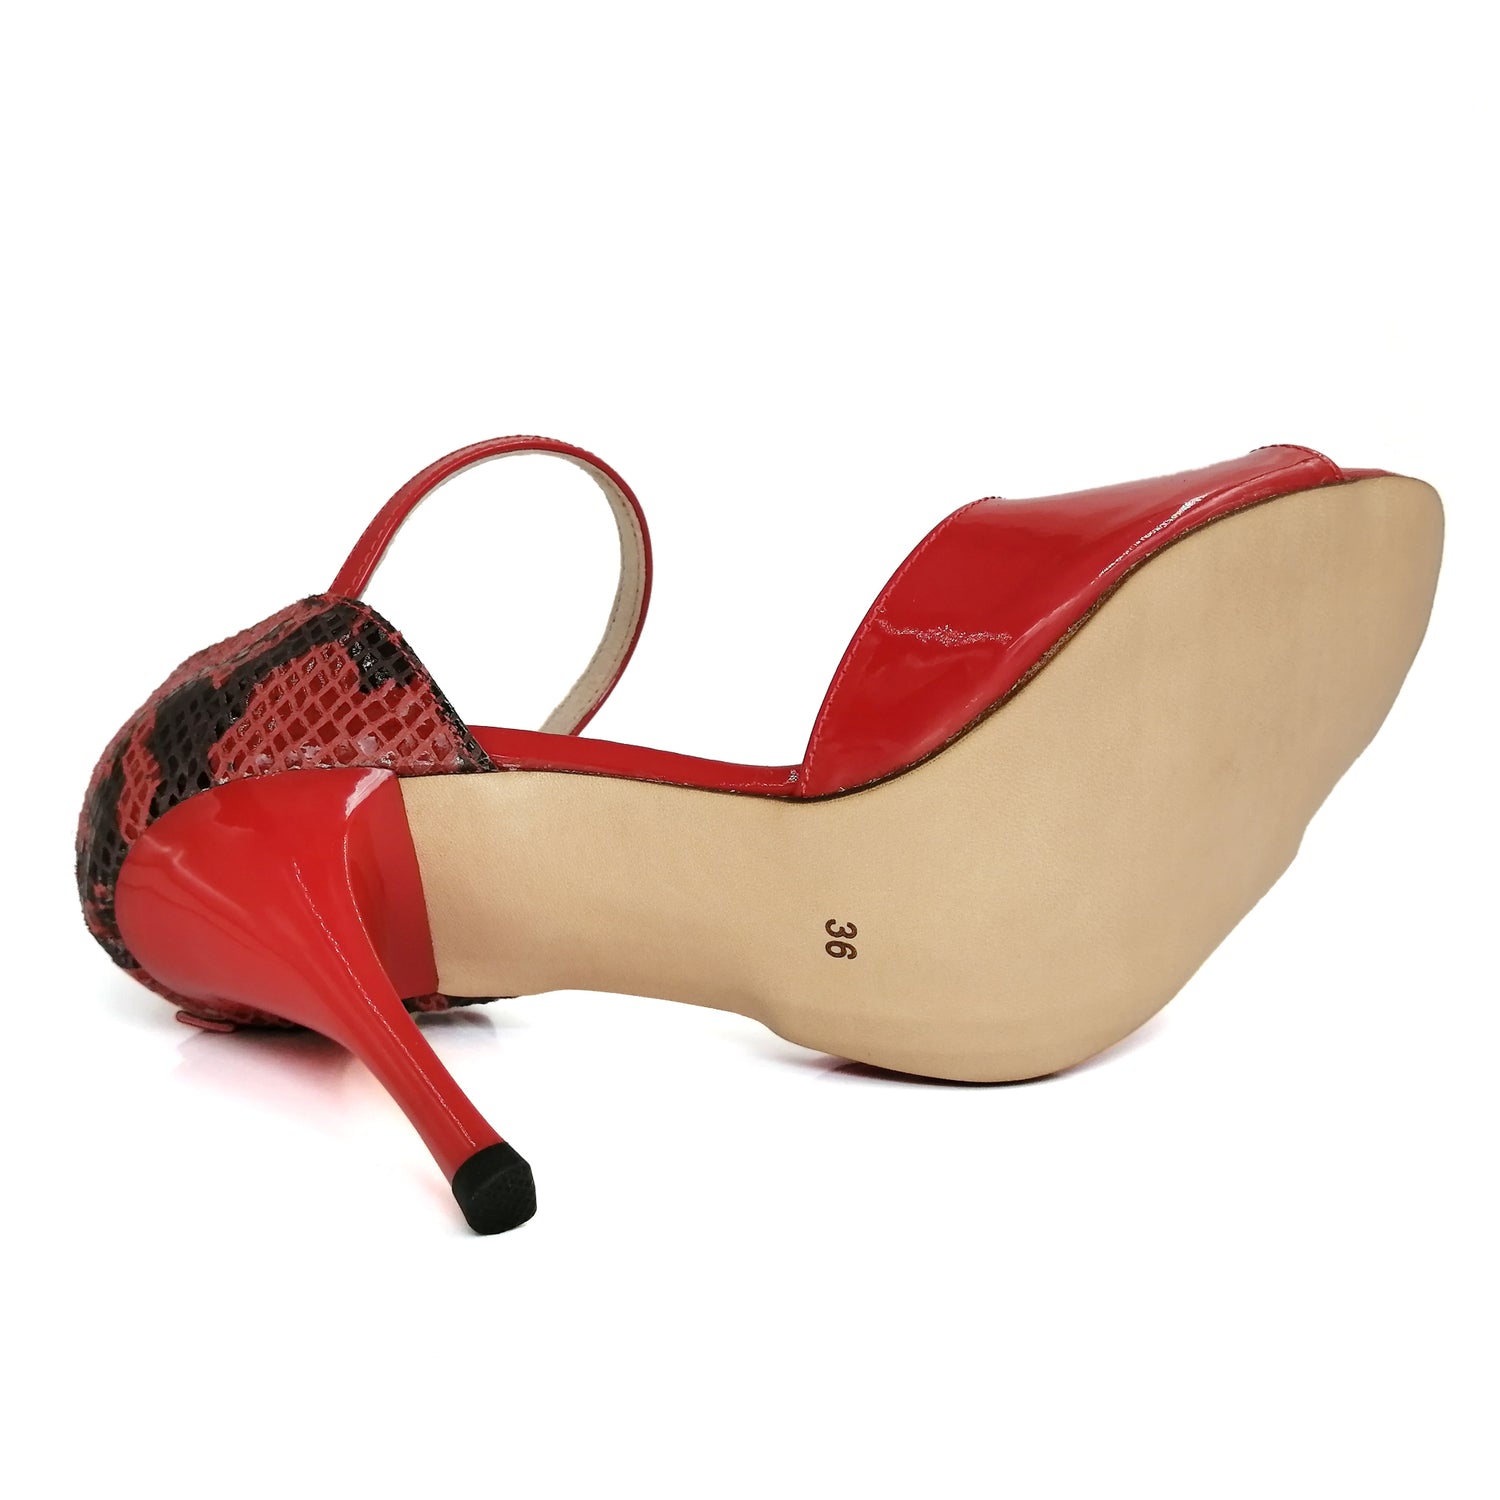 Pro Dancer red leather high heels Argentine Tango dance sandals5